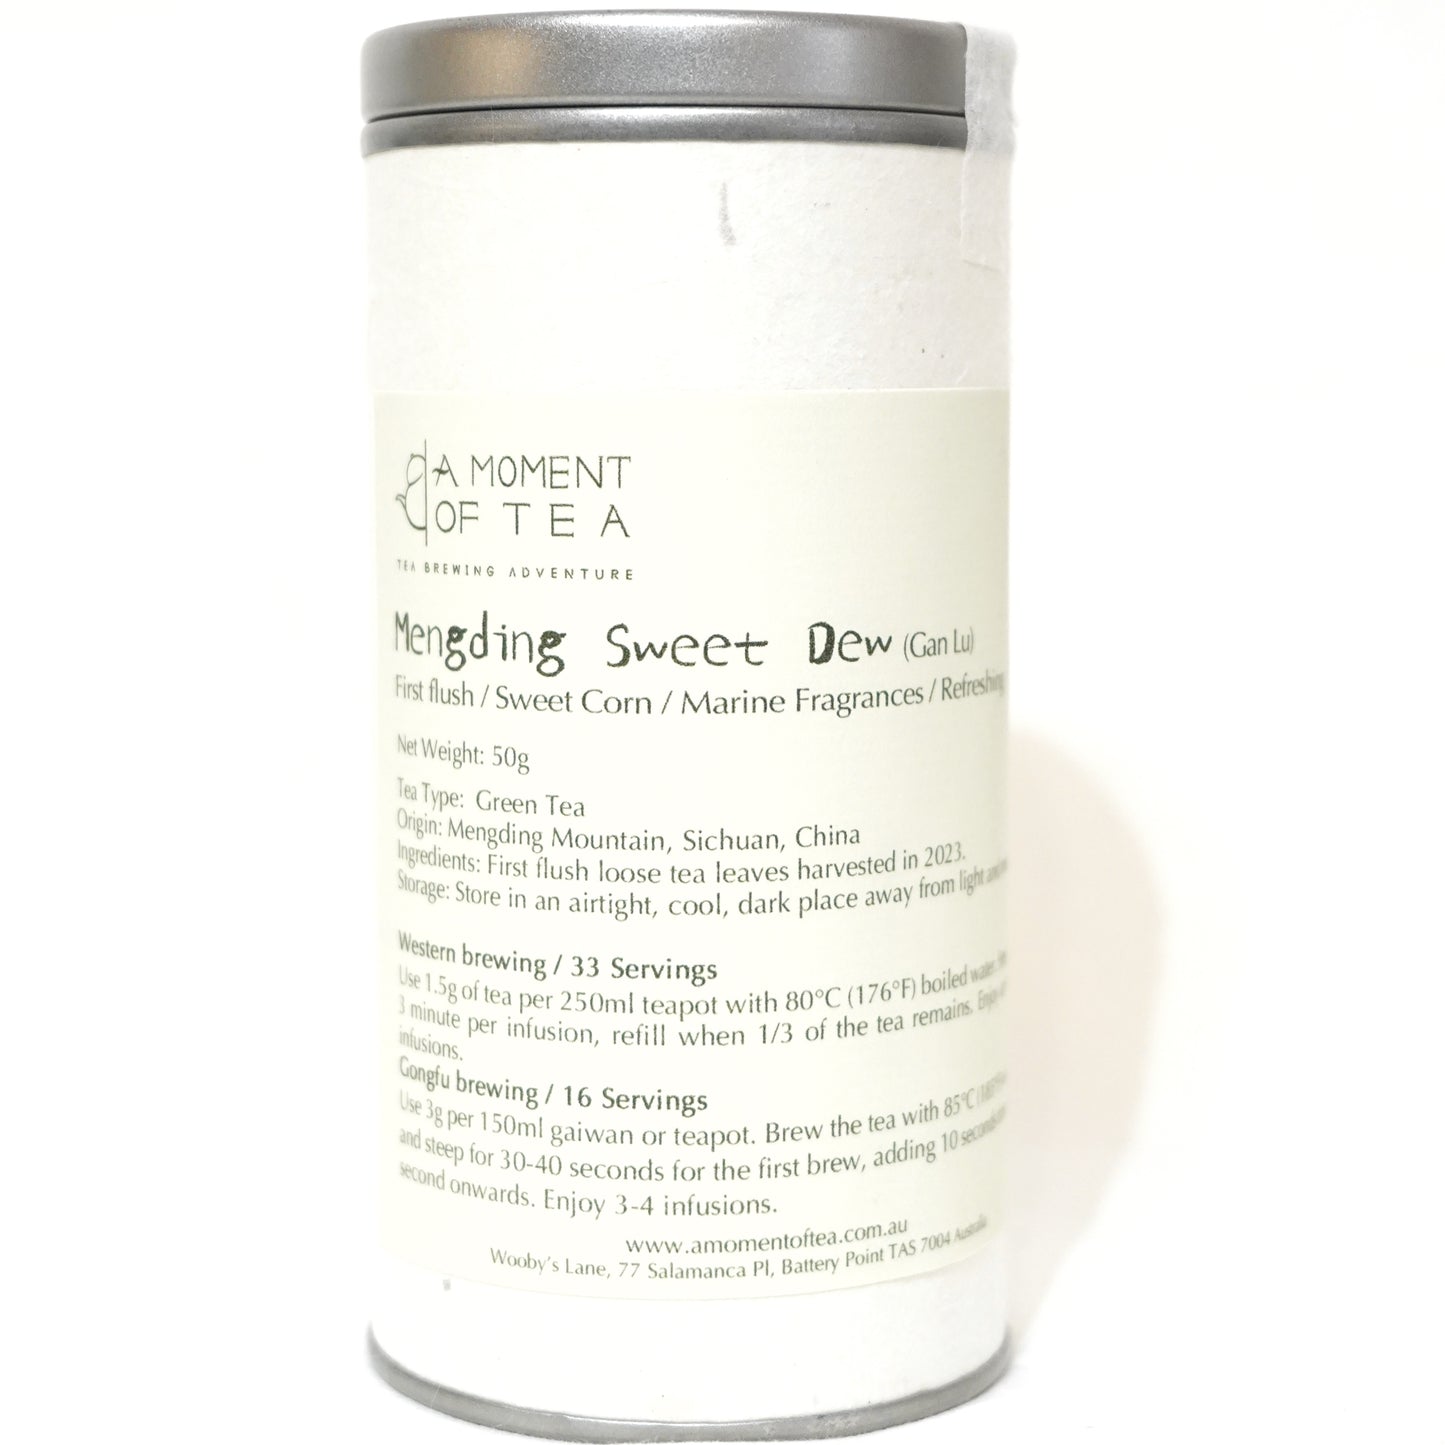 Mengding Sweet Dew / Mengding Gan Lu Green Tea -First Flush